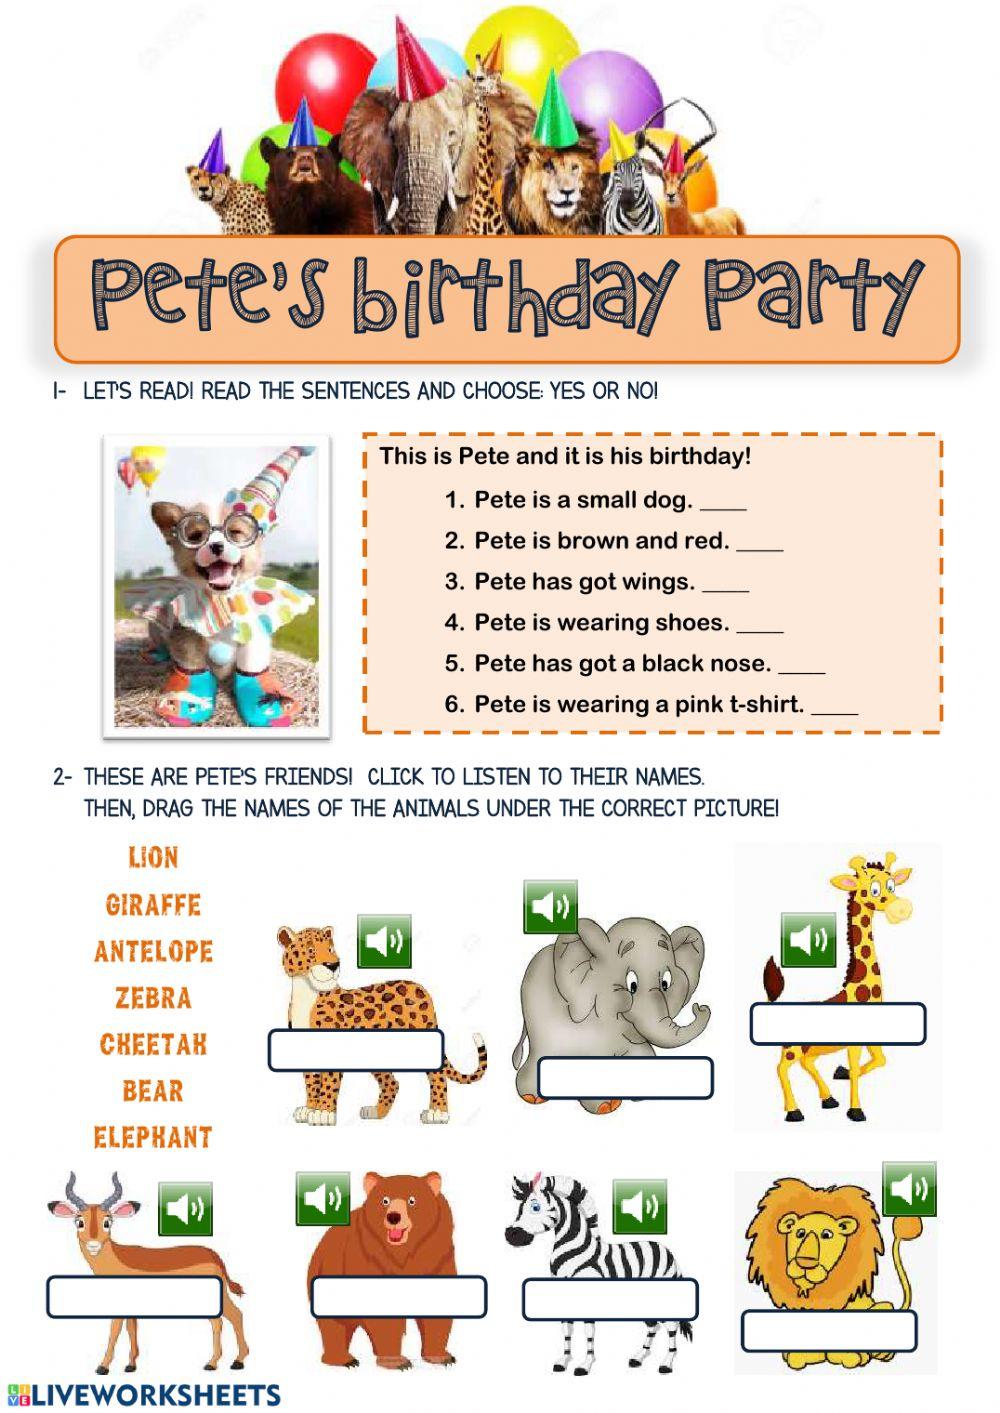 Pete's Birthday Party